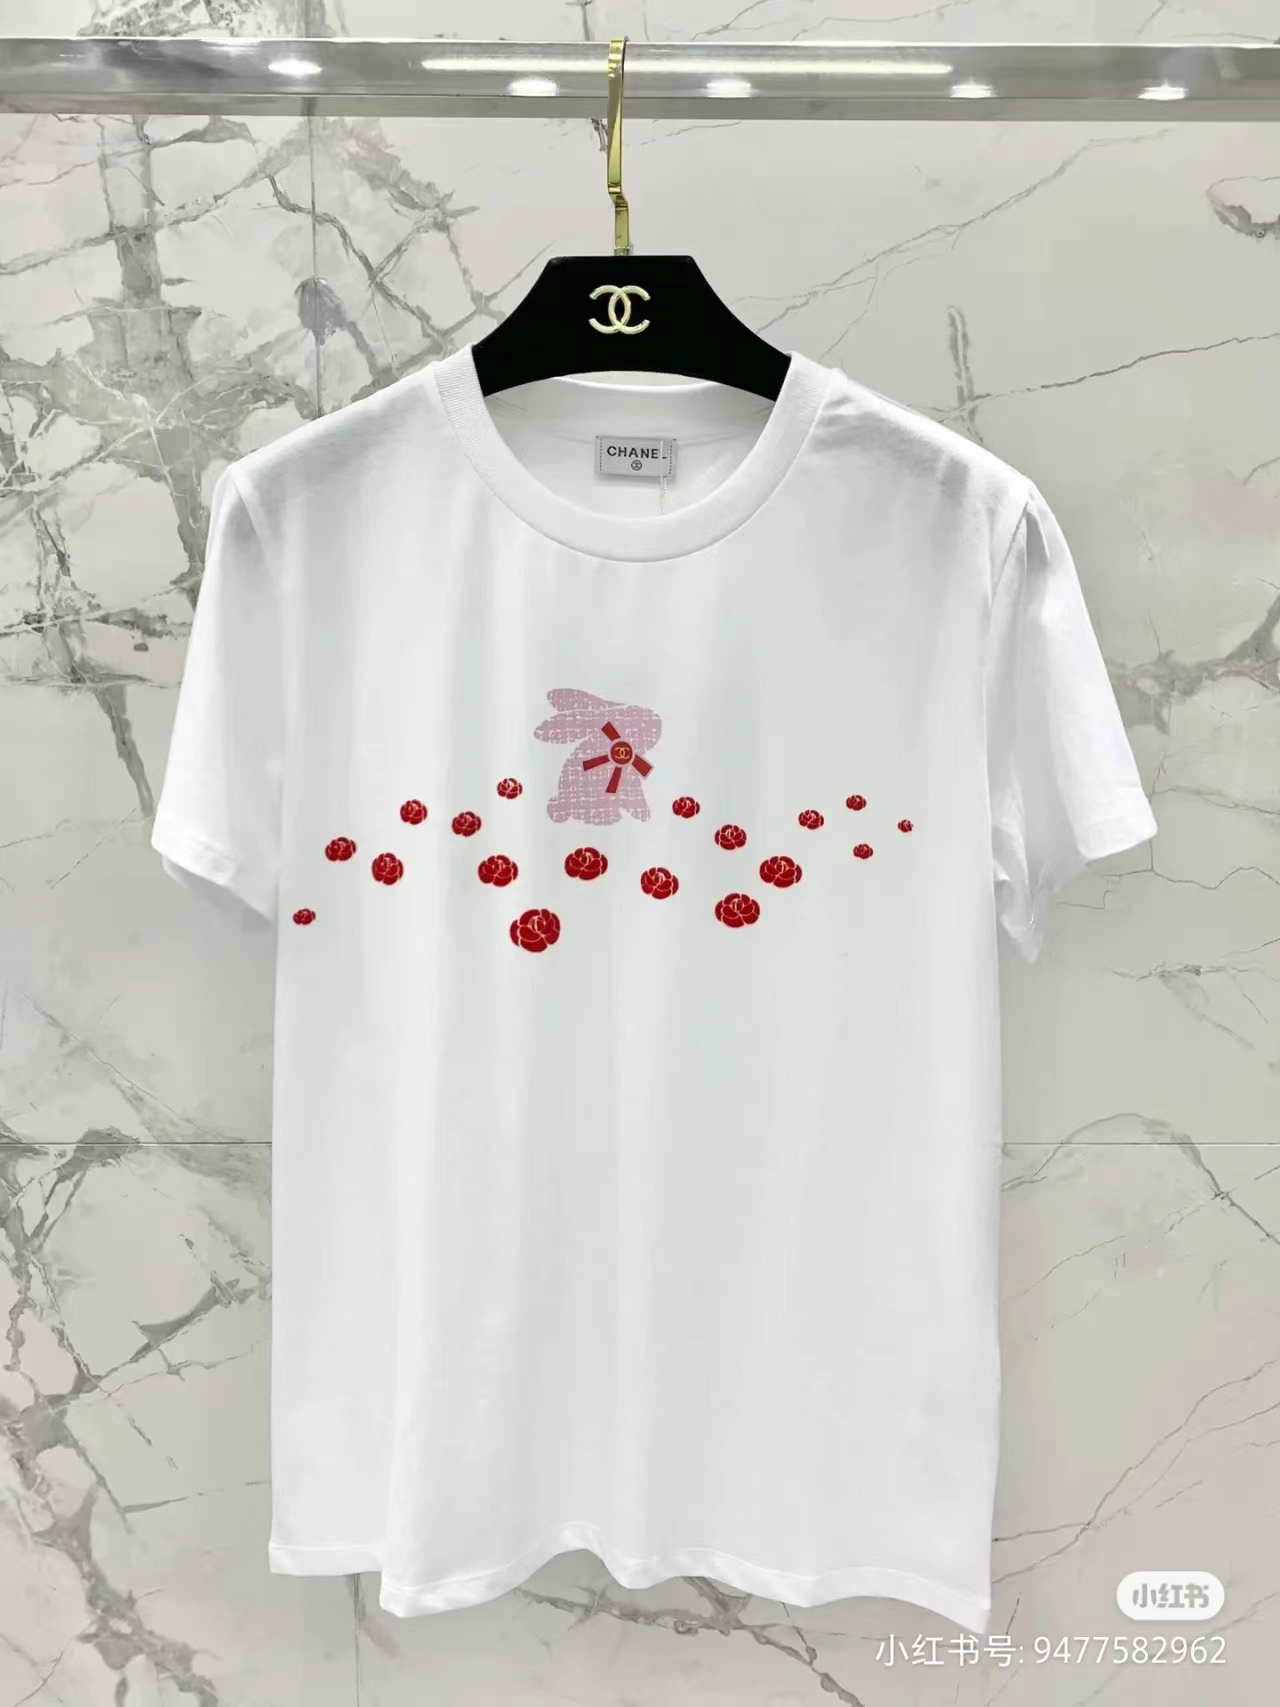 Chanel Cute Rabbit Printed Leisure Unisex Cotton T-shirt